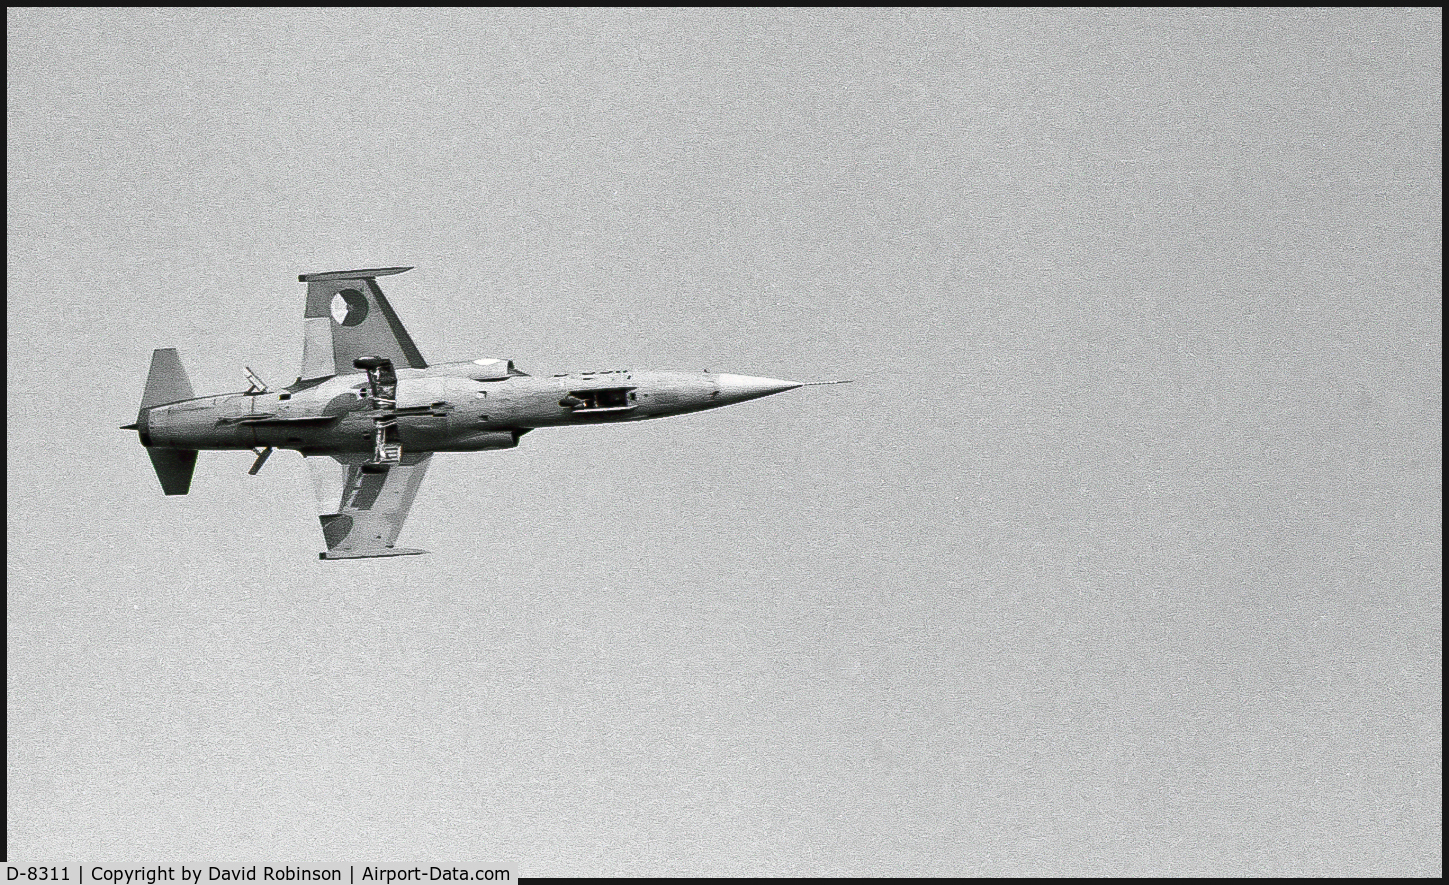 D-8311, Lockheed F-104G Starfighter C/N 683-8311, Doncaster air display c.1970